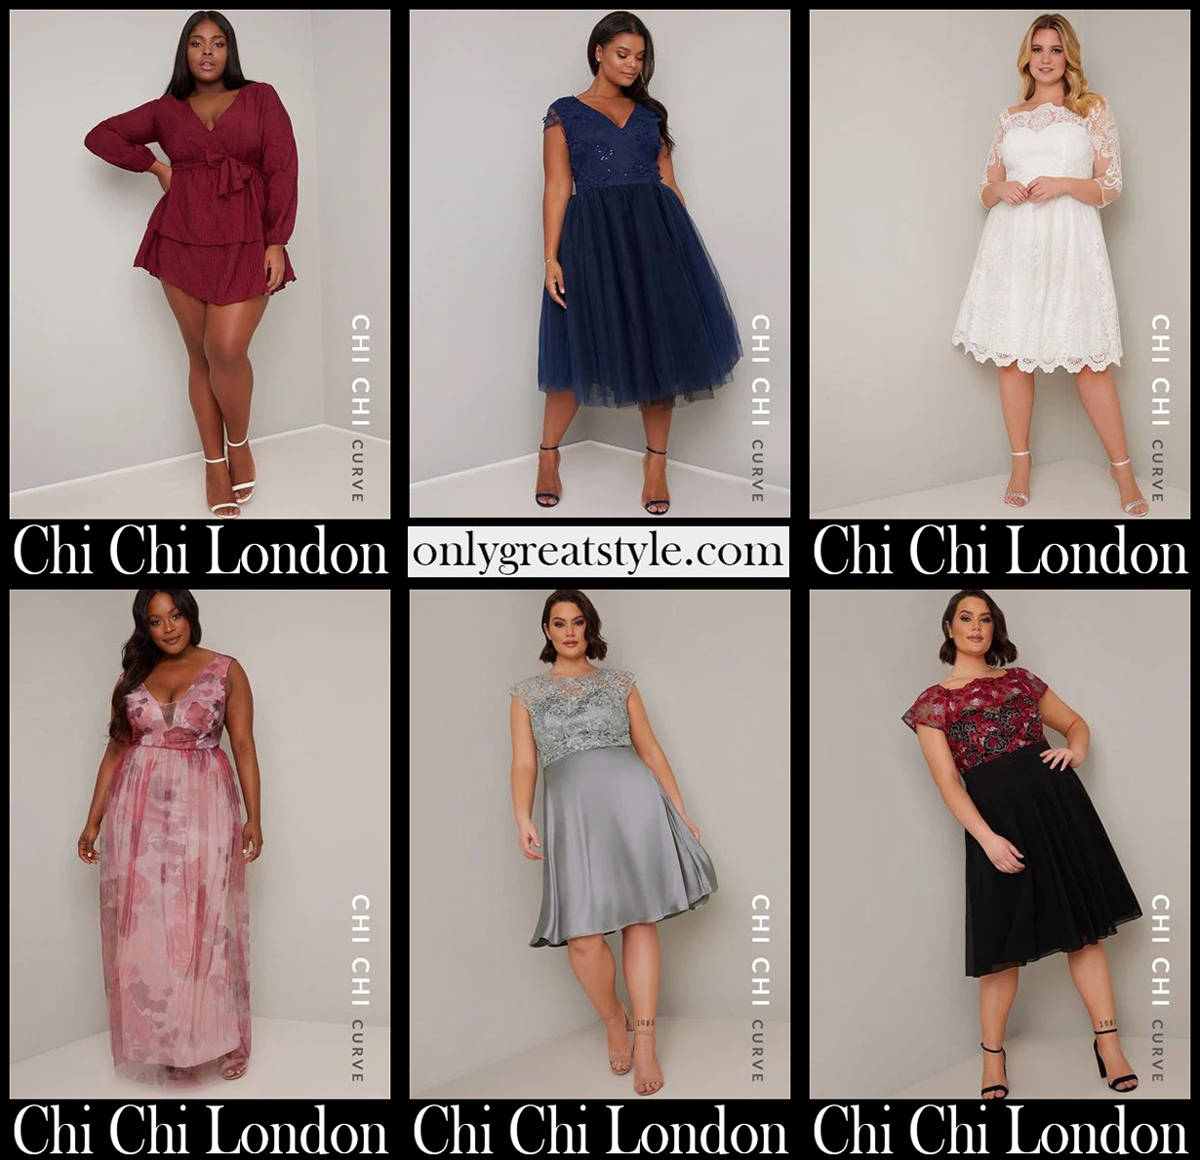 Plus size dresses Chi Chi London clothing fashion curvy